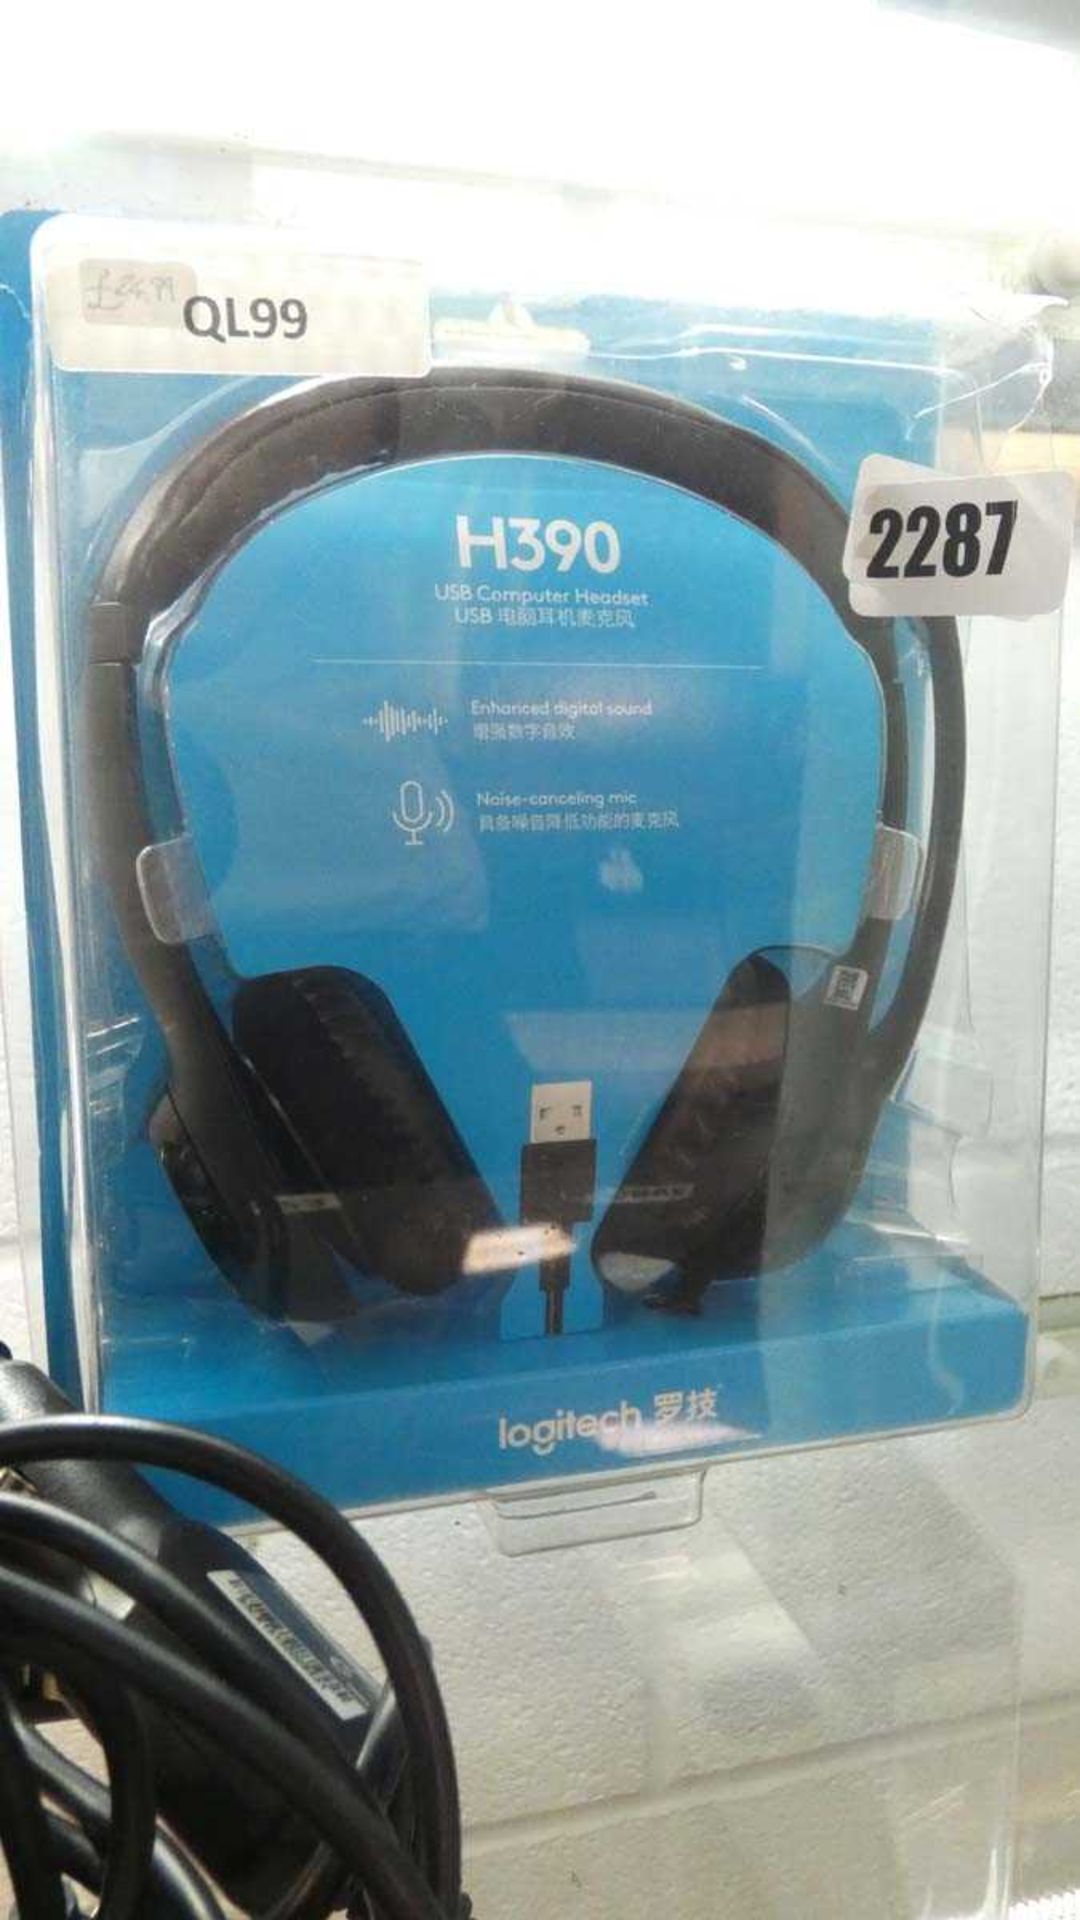 Logitech H390 headset in box